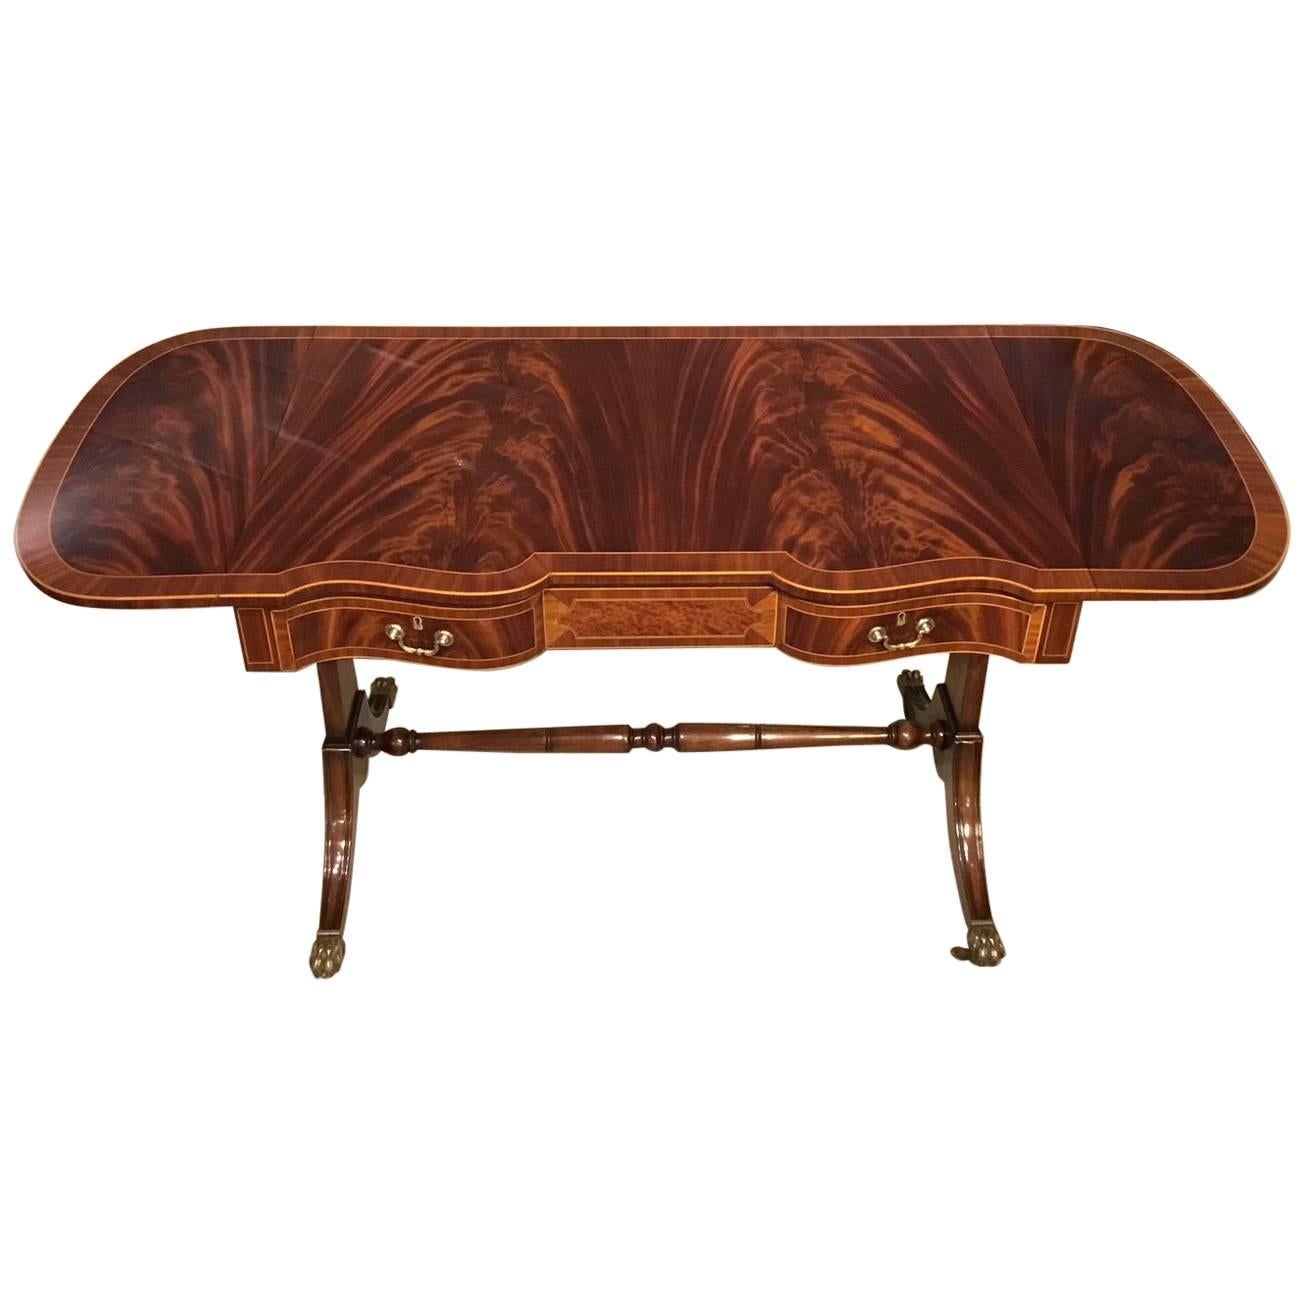 Fine Quality Flame Mahogany Edwardian Period Antique Sofa Table